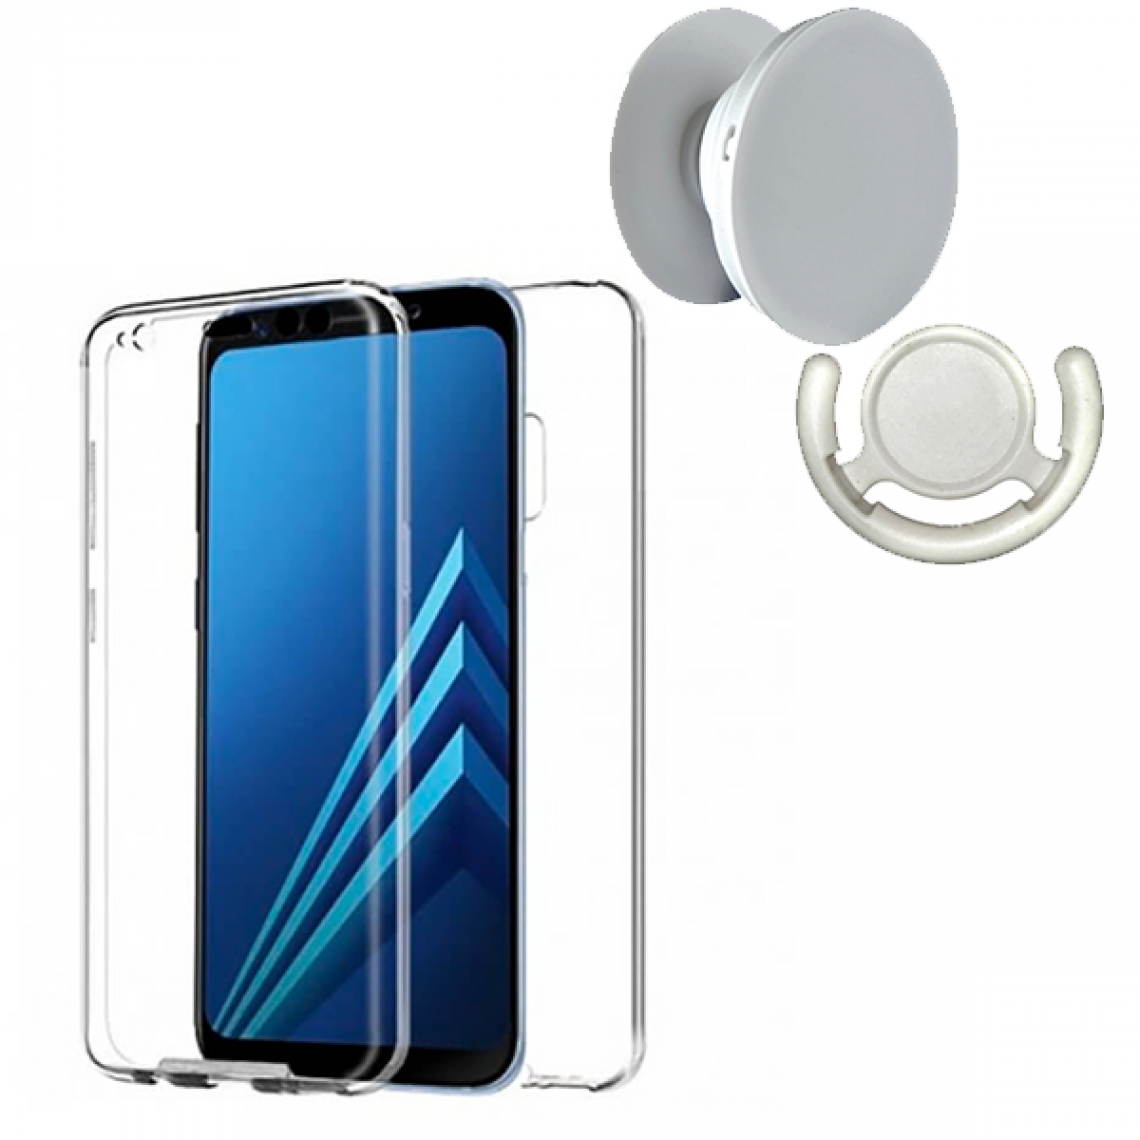 Phonecare - Kit Coque 3x1 360° Impact Protection + 1 PopSocket + 1 Support PopSocket Blanc - Impact Protection - Samsung S7 - Coque, étui smartphone